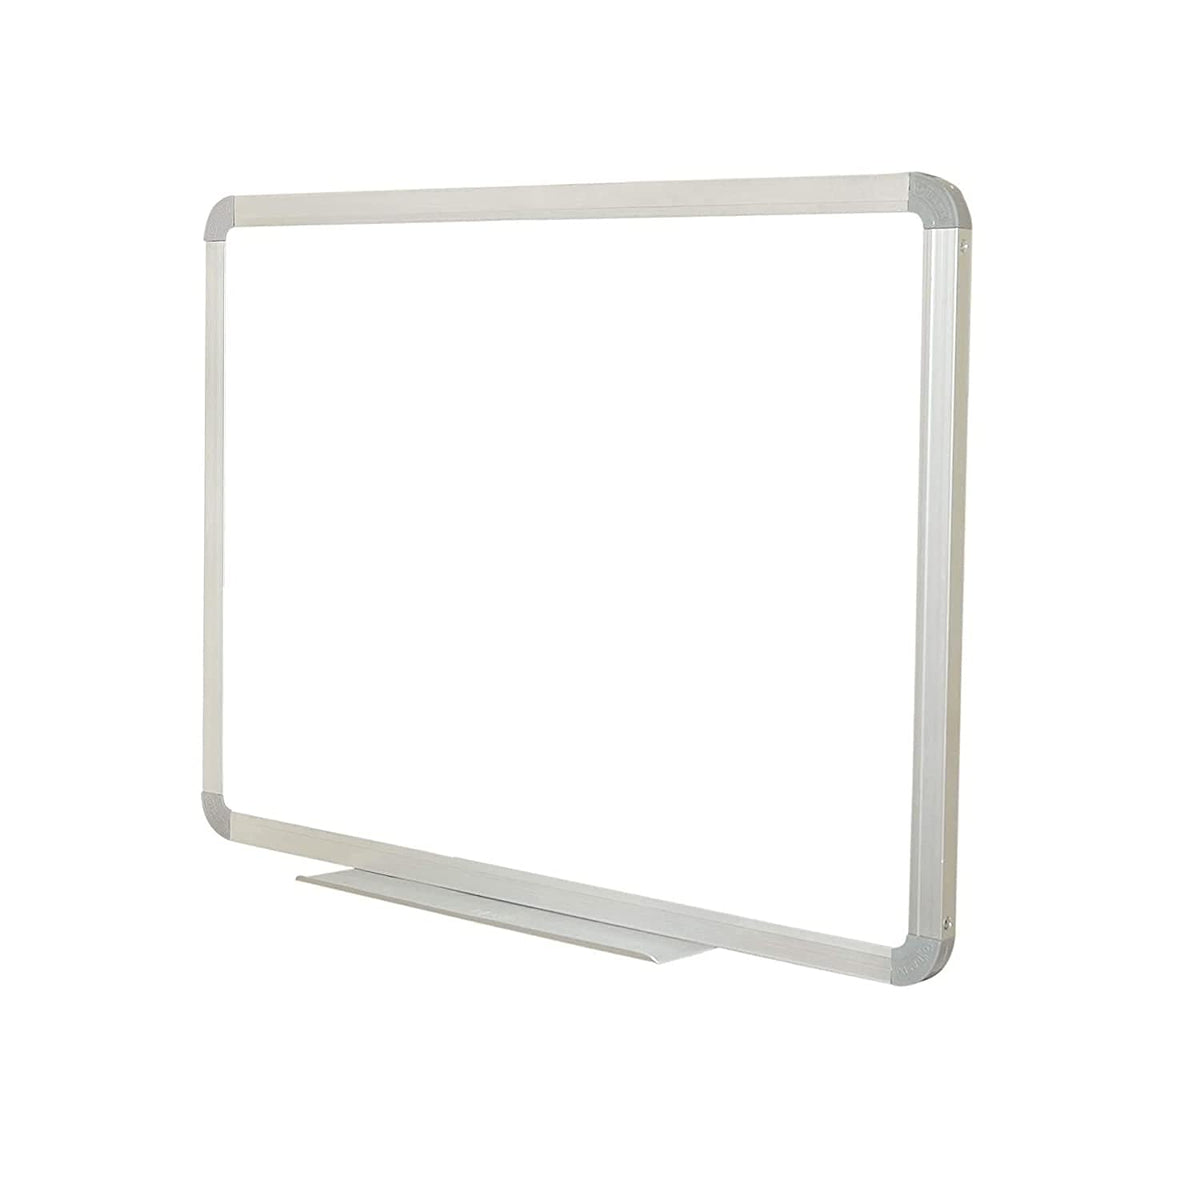 OBASIX® Superior Series White Board Ceramic Steel (Magnetic) 3x3 Feet | Natural Finesse Heavy Aluminium Frame SCWB9090